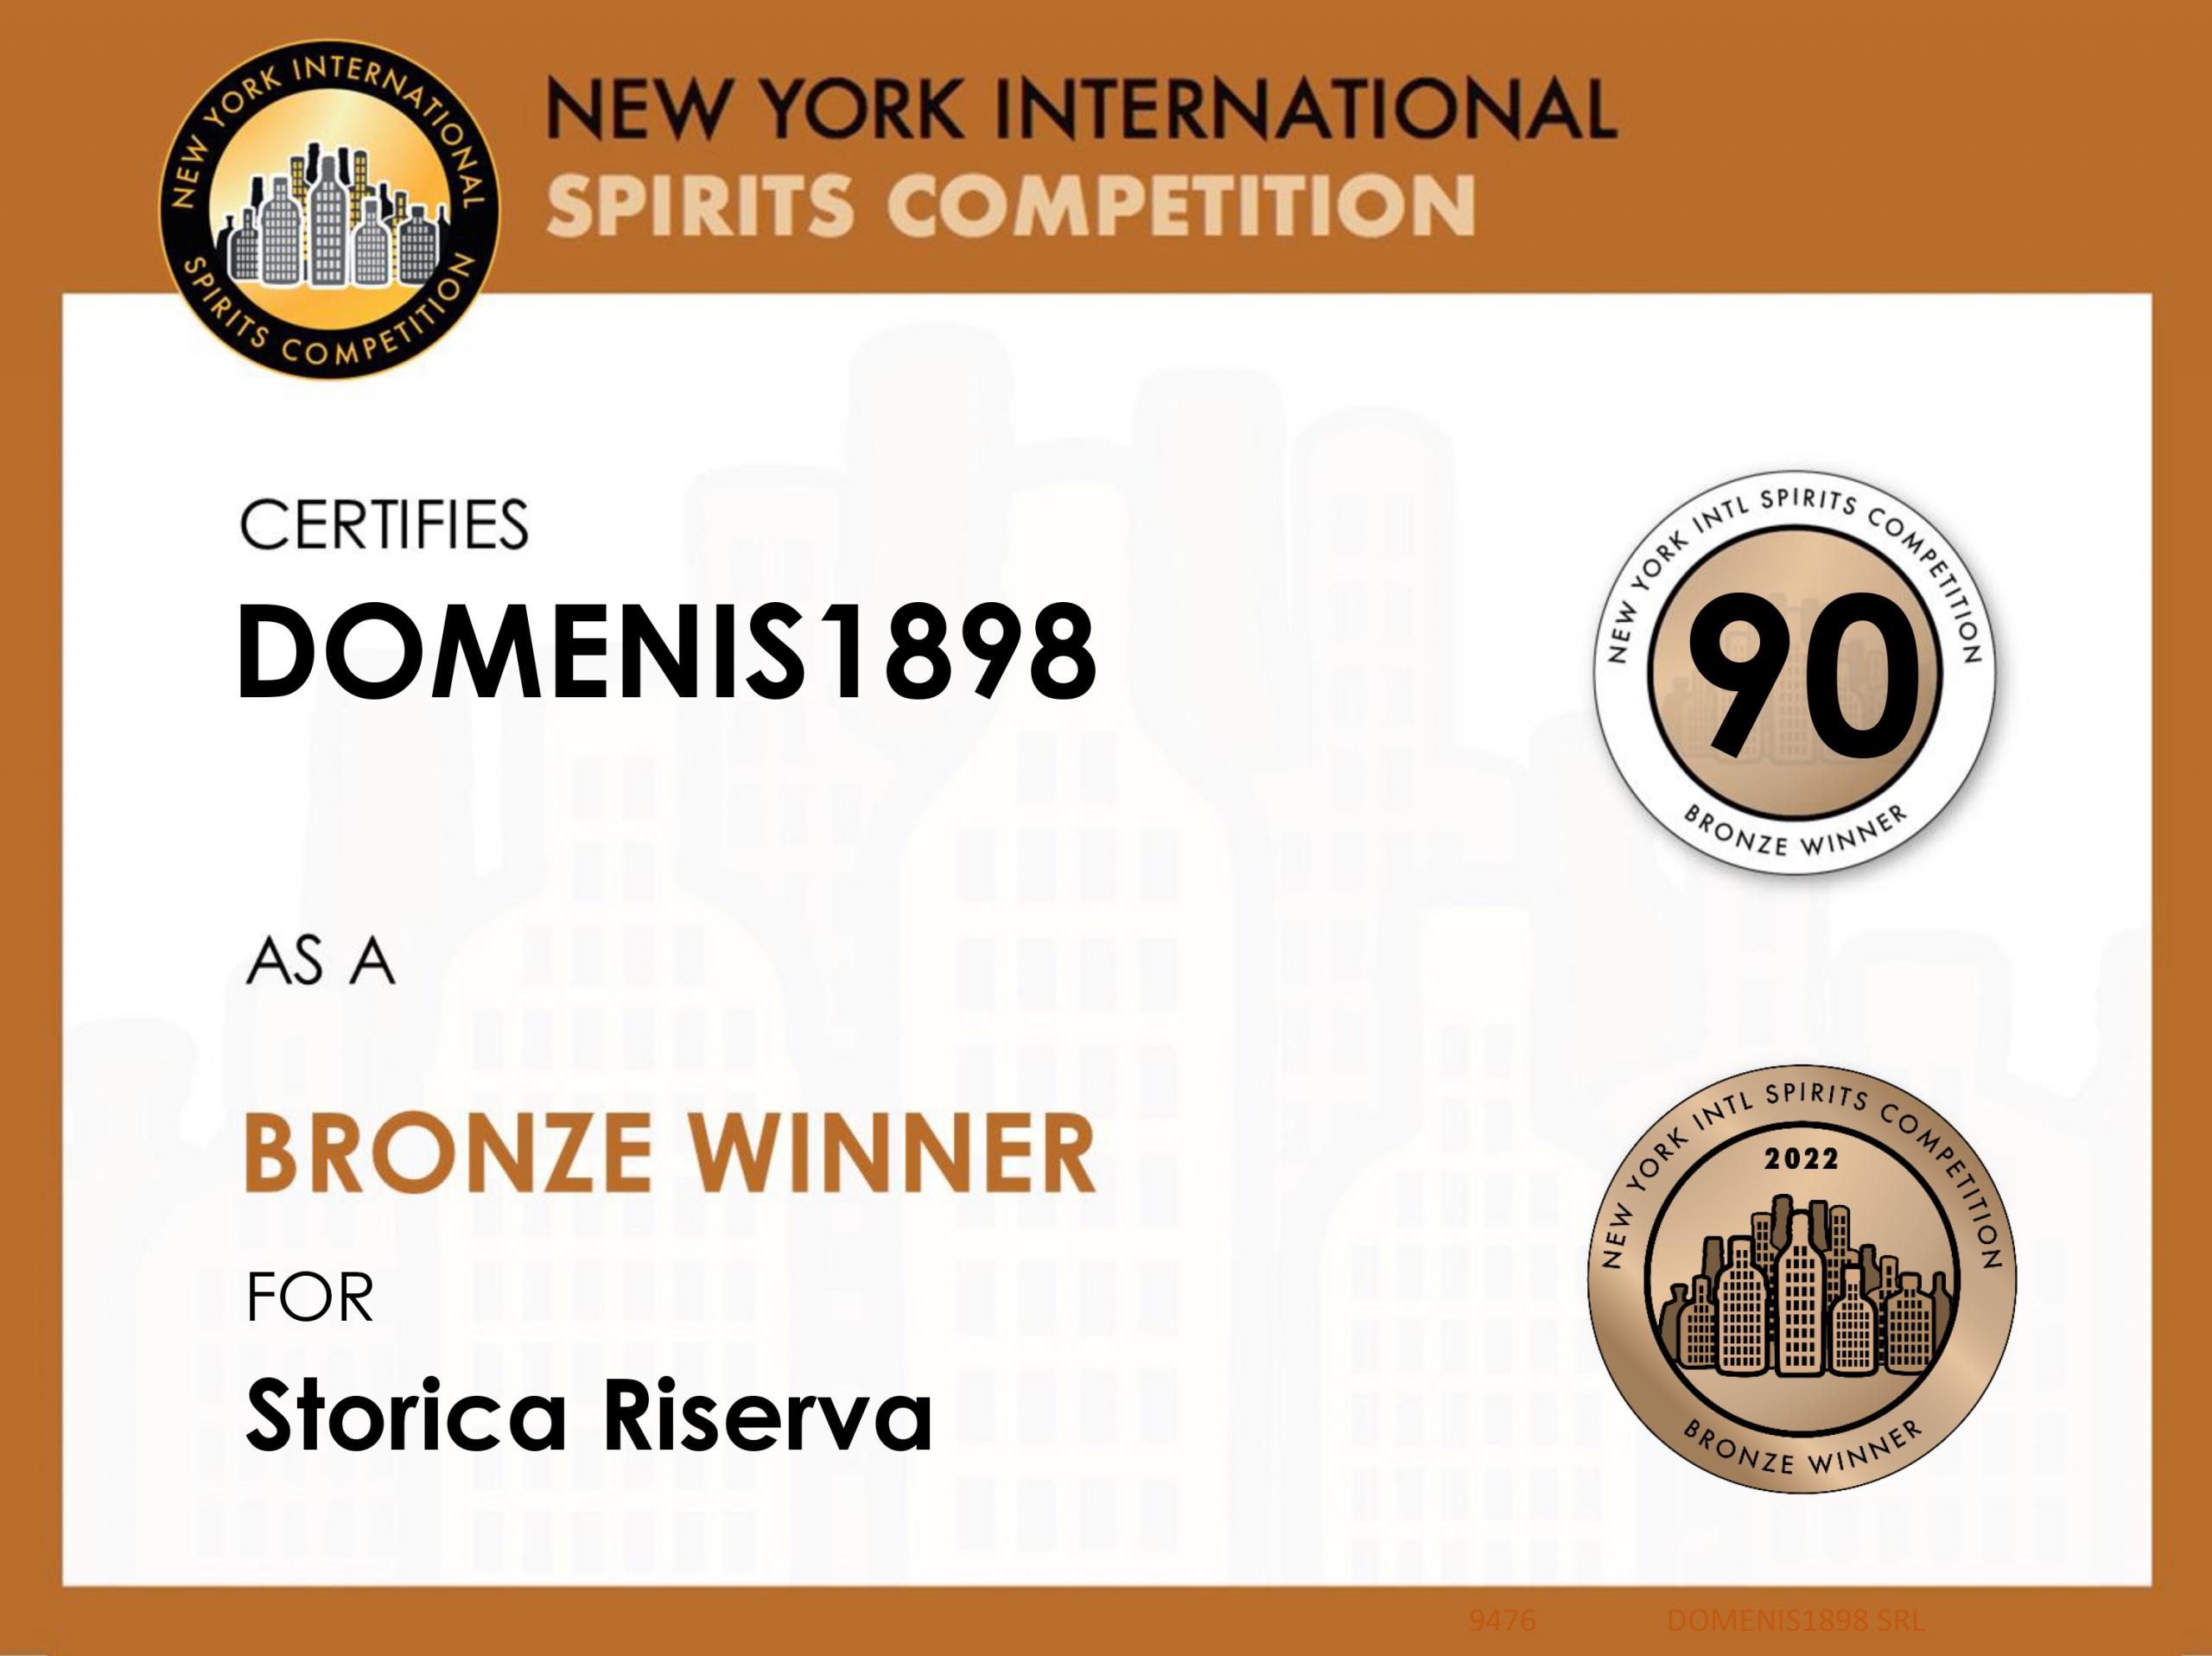 New York Intl Spirits Competition 2022 – Bronze Winner – Storica Riserva